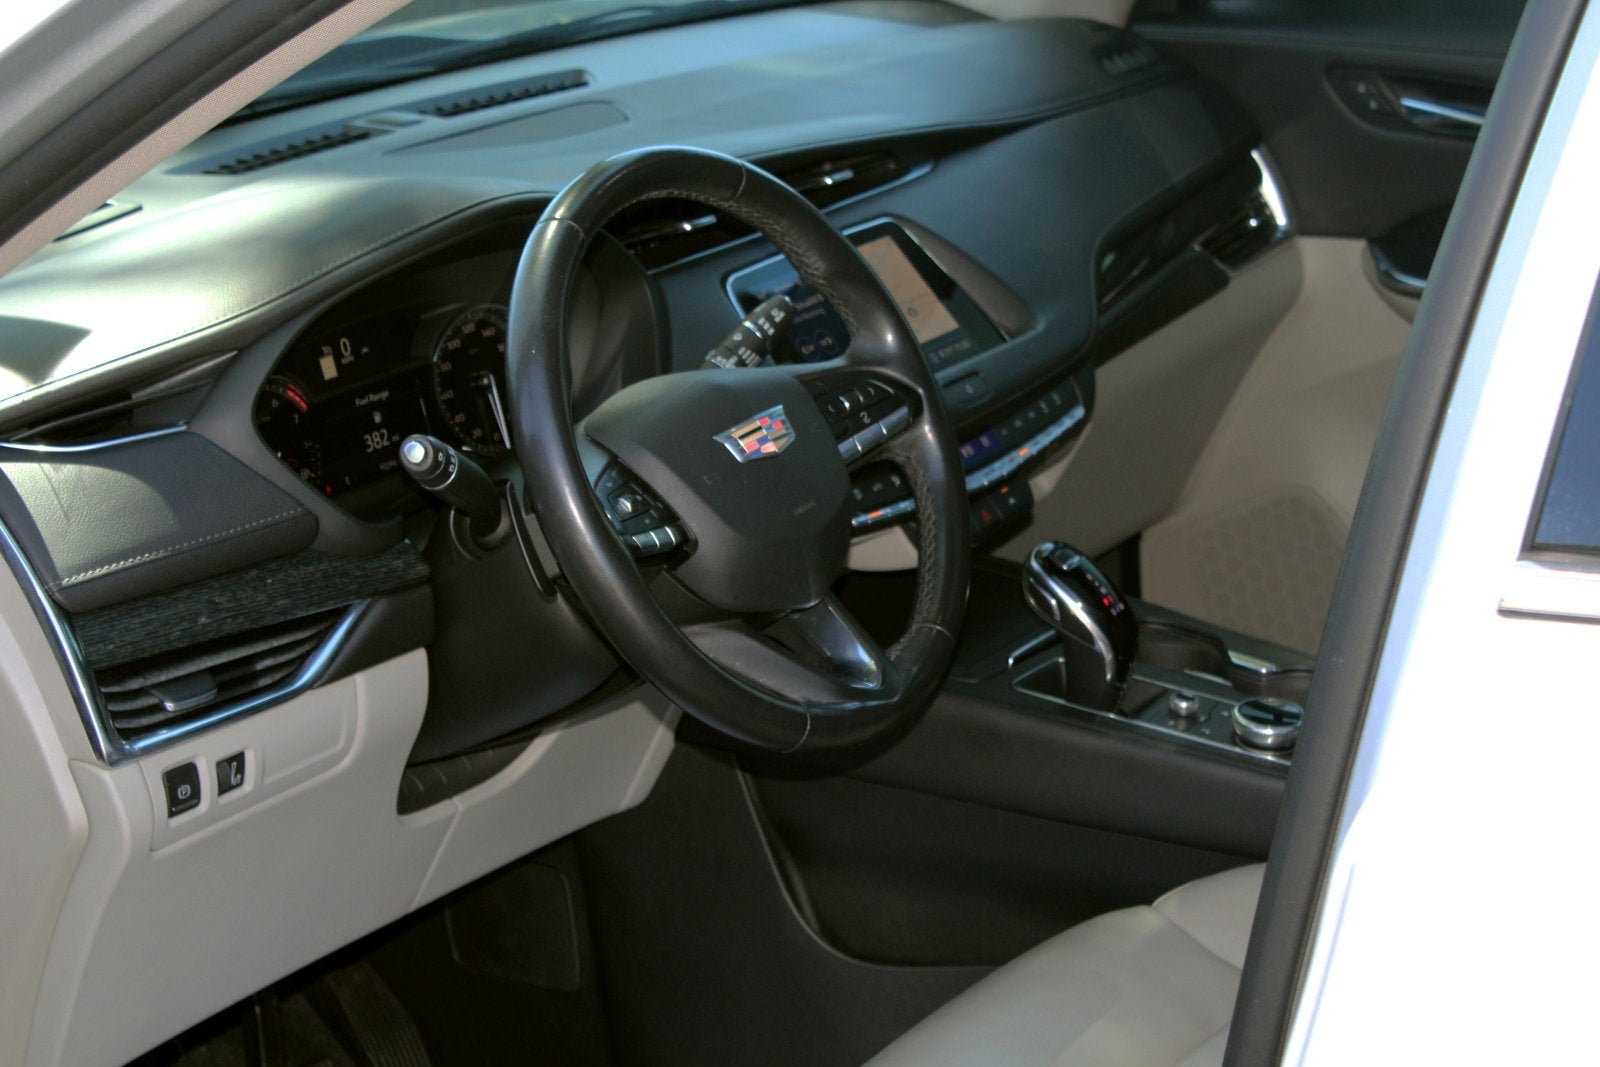 2020 Cadillac XT4 FWD Premium Luxury